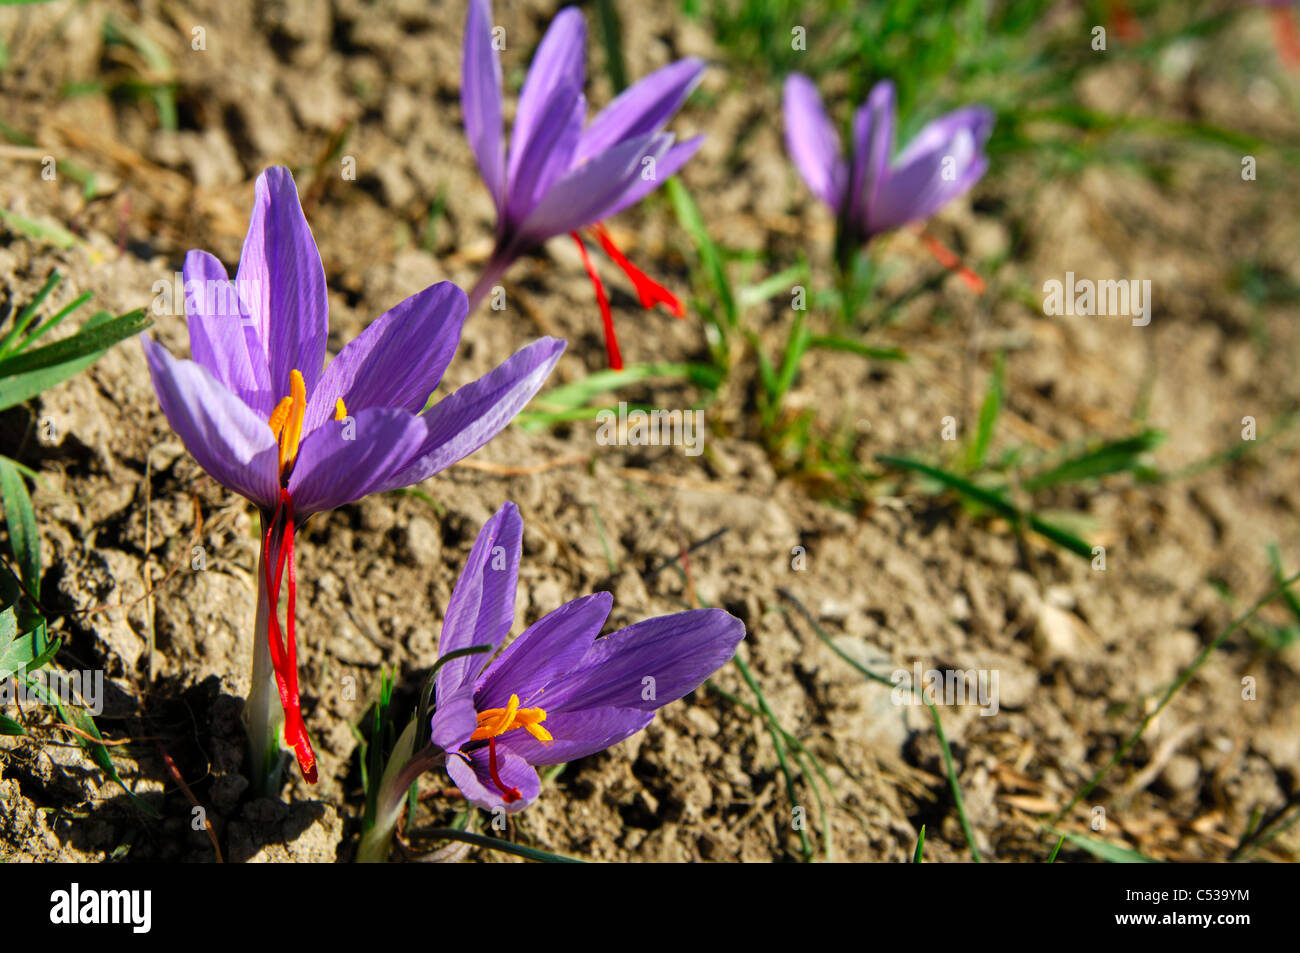 Autumn Crocuses, Saffron flowers, Crocus sativus, with the typical three red stigmas, Mund, Valais, Switzerland Stock Photo